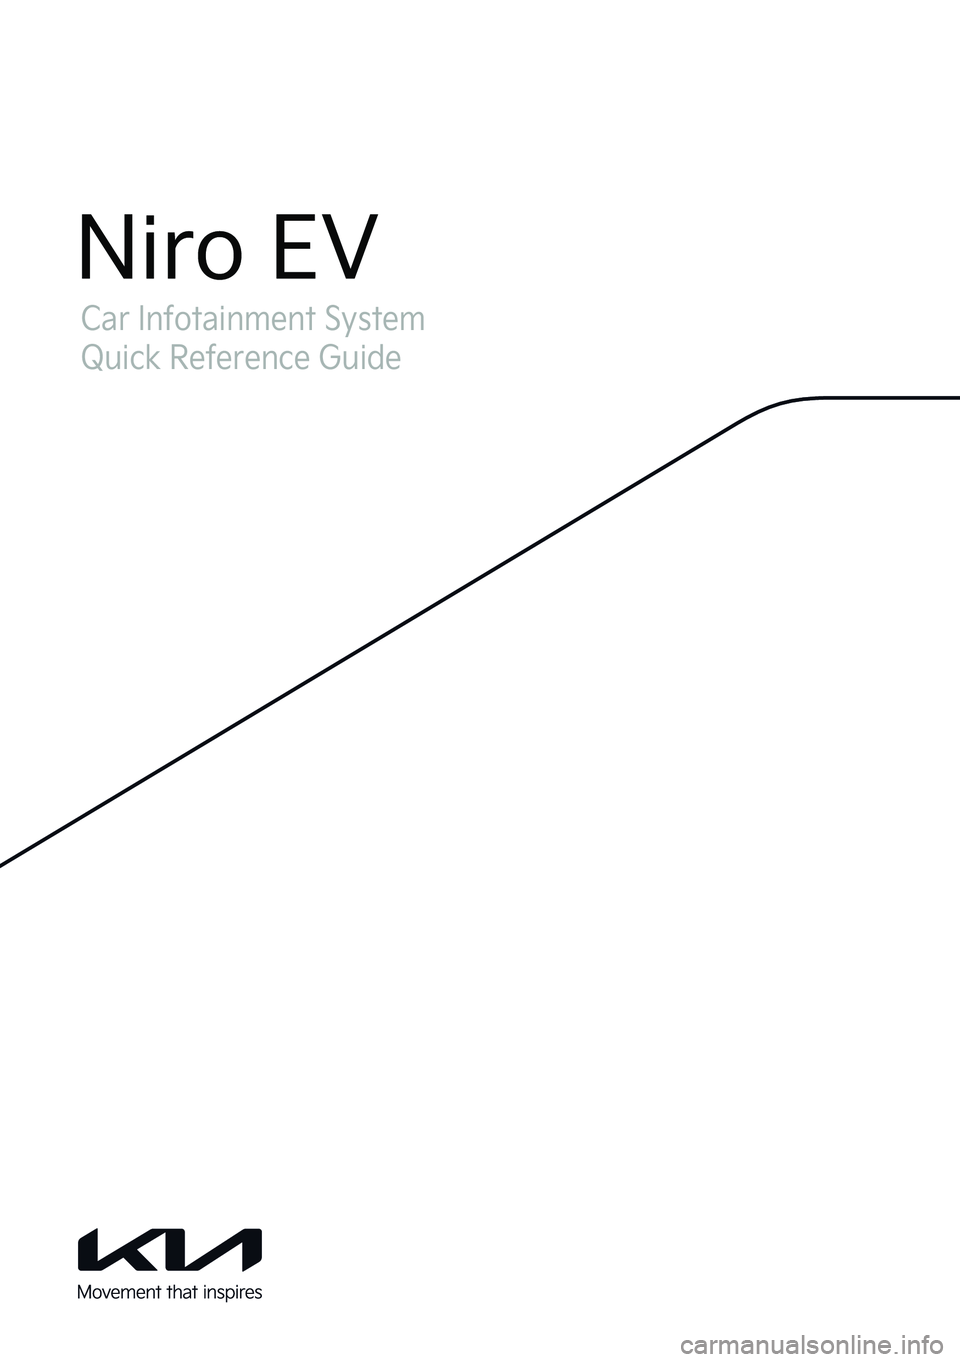 KIA NIRO EV 2022  Navigation System Quick Reference Guide Car Infotainment System
Quick Reference Guide
Niro EV  